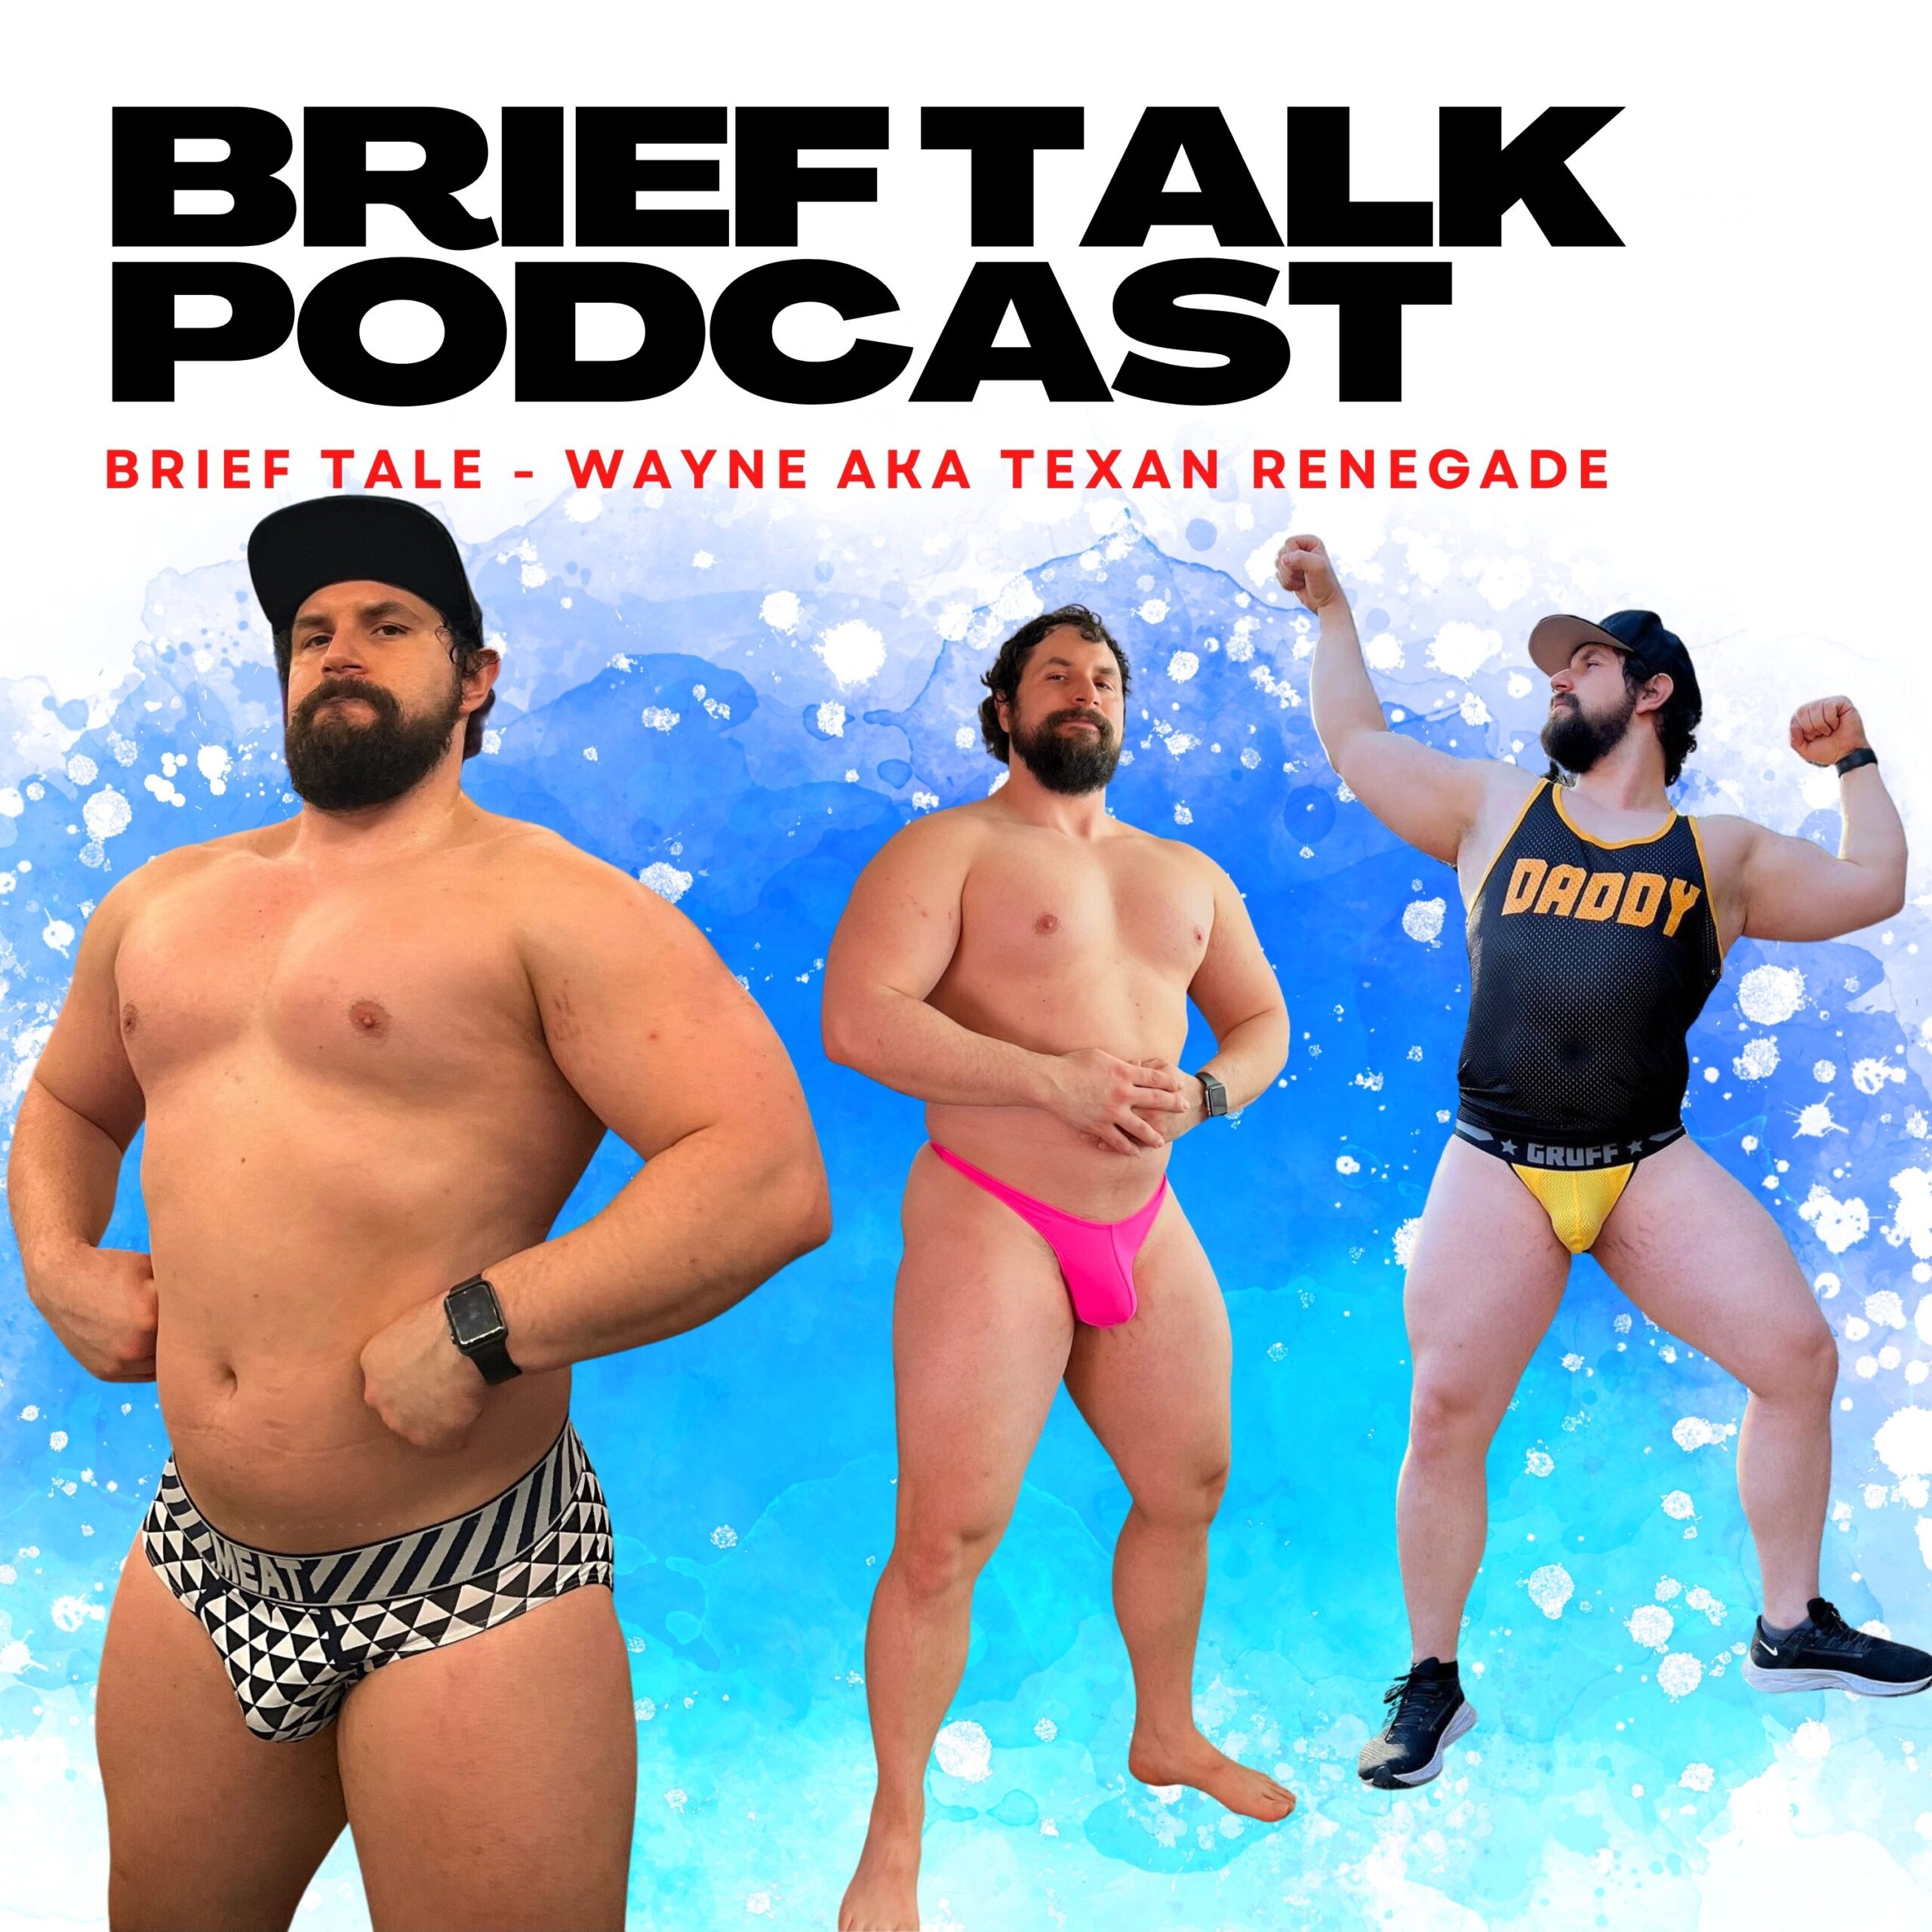 Brief Talk Podcast – Brief Tale – Wayne aka Texan Renegade